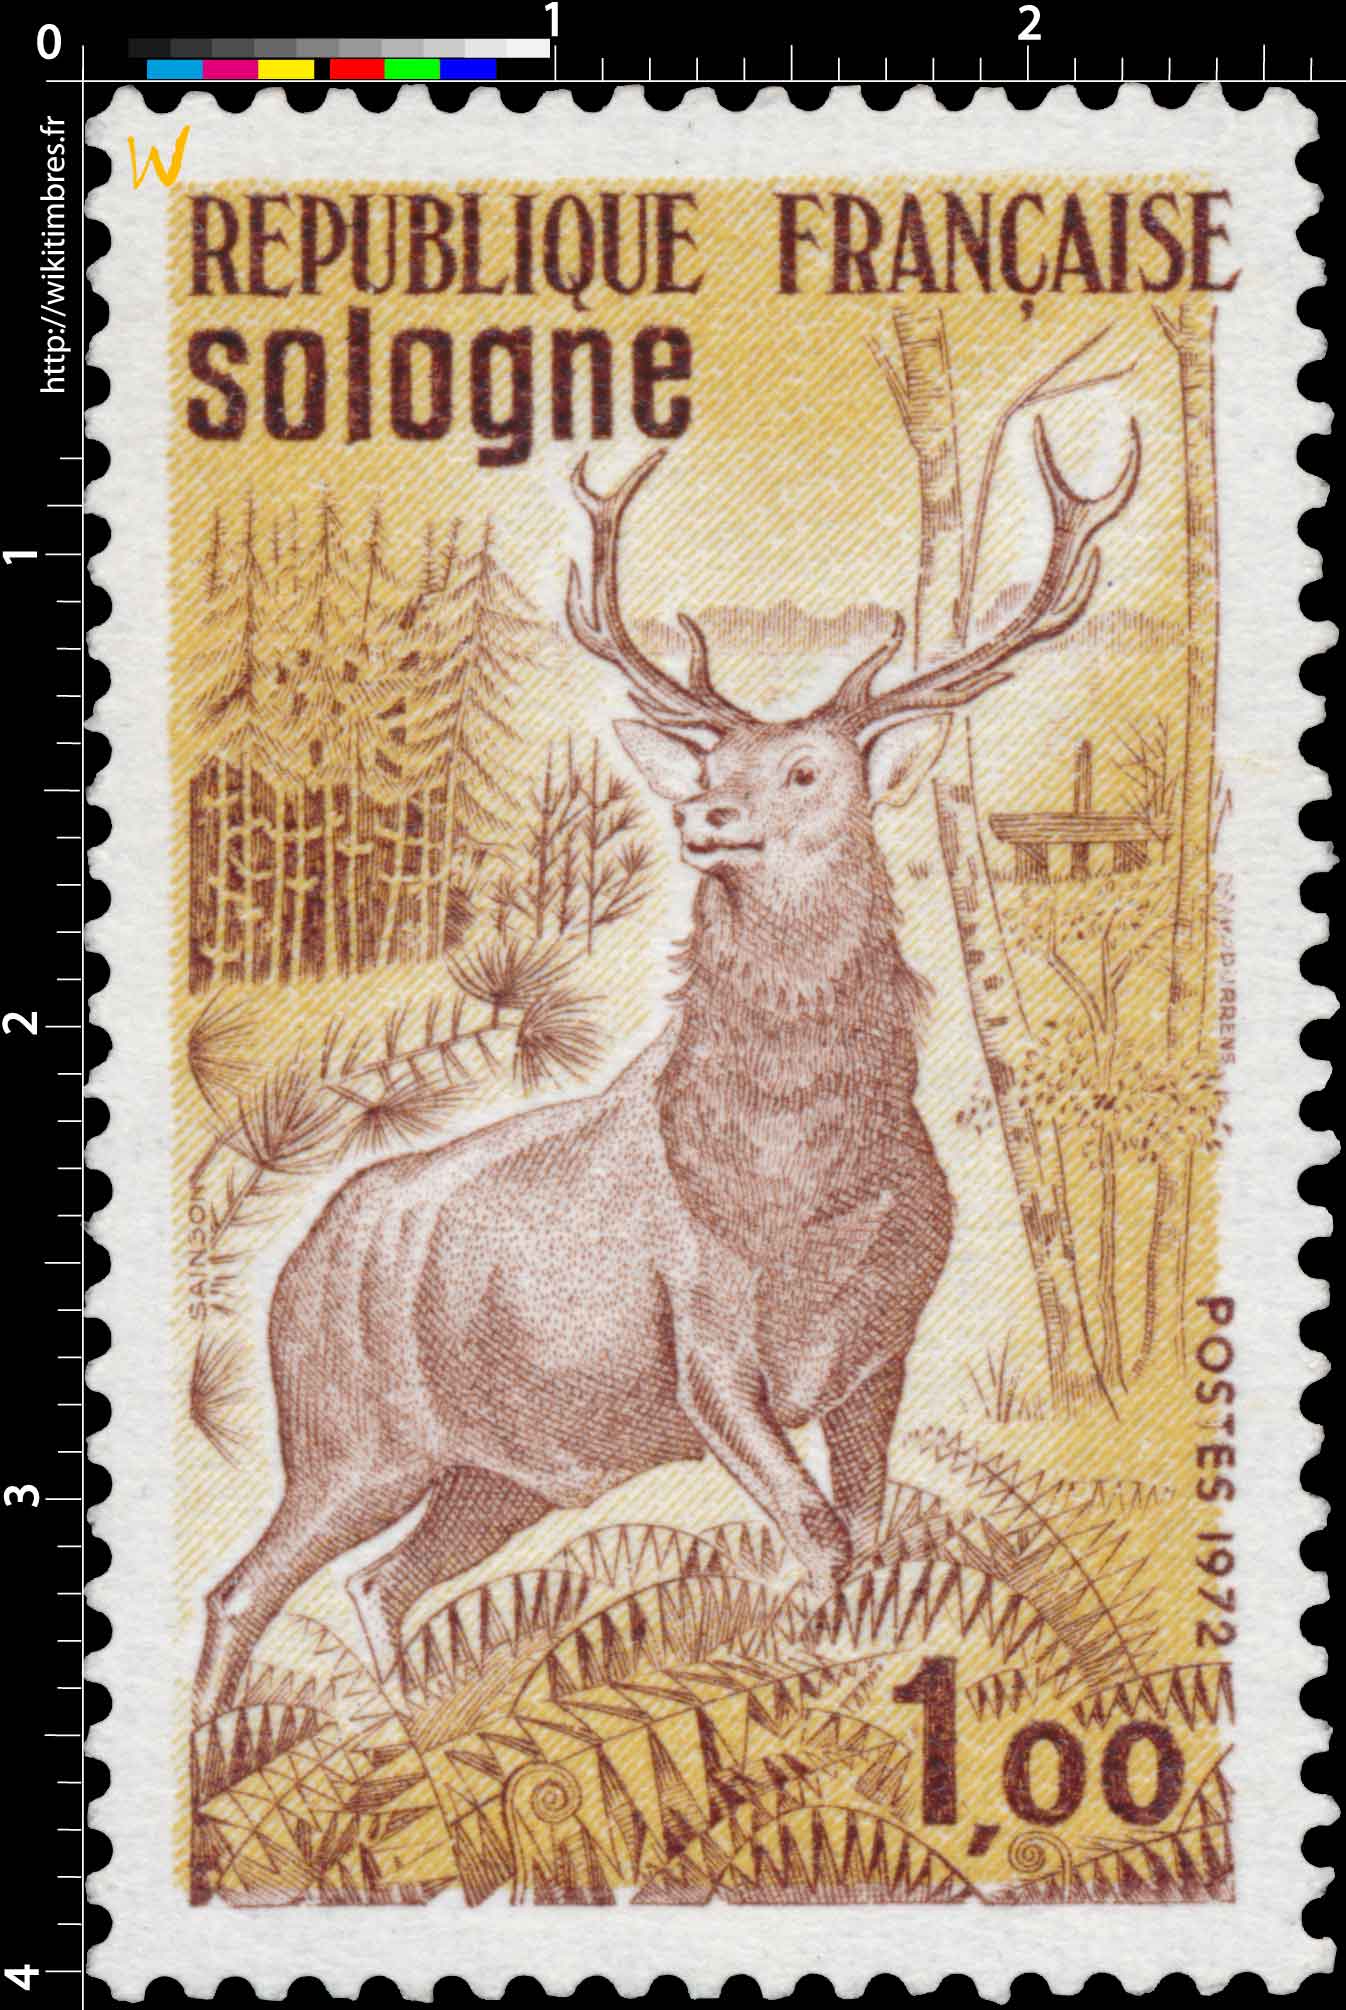 1972 Sologne